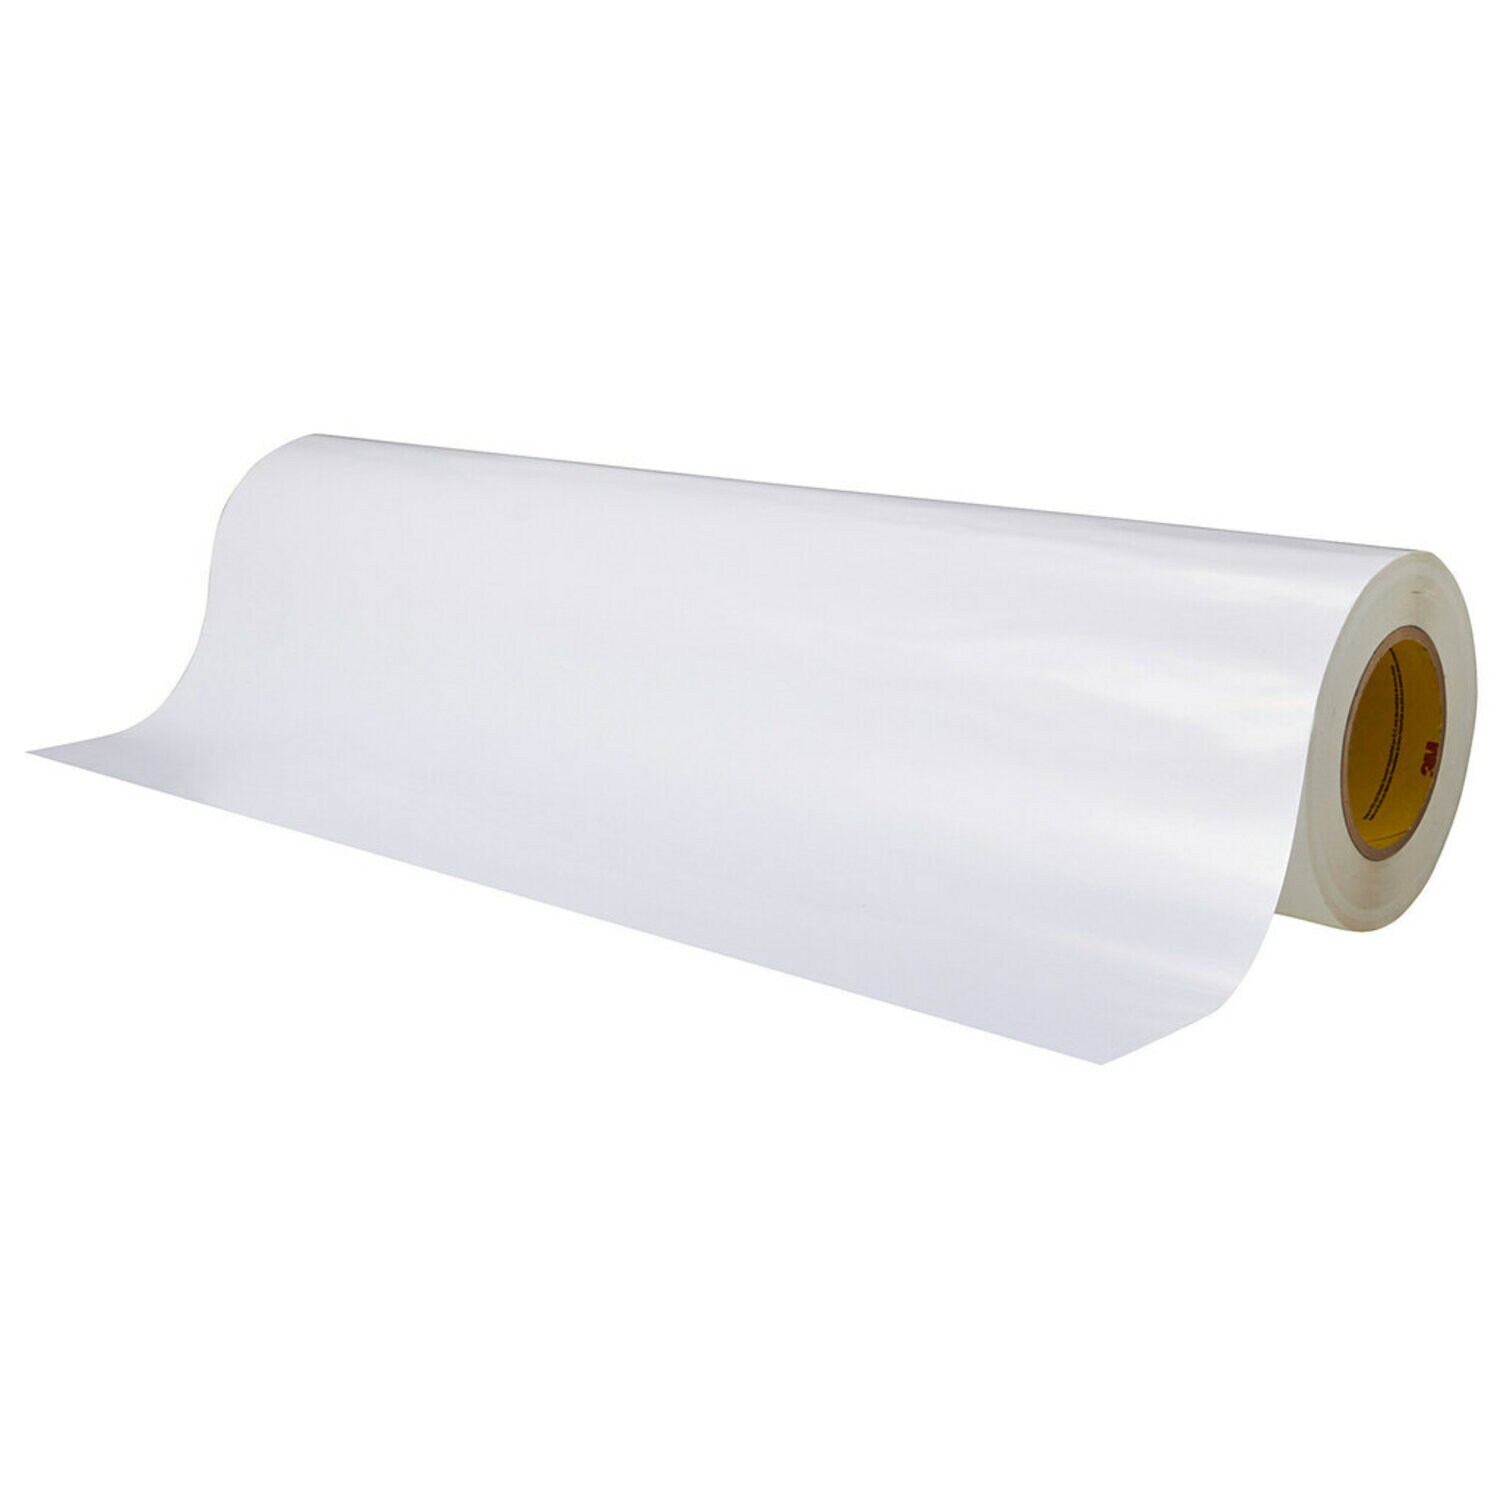 Heat N Bond Lite Sewable Paper Backed Adhesive - 17 x 1 1/4 yds. - White